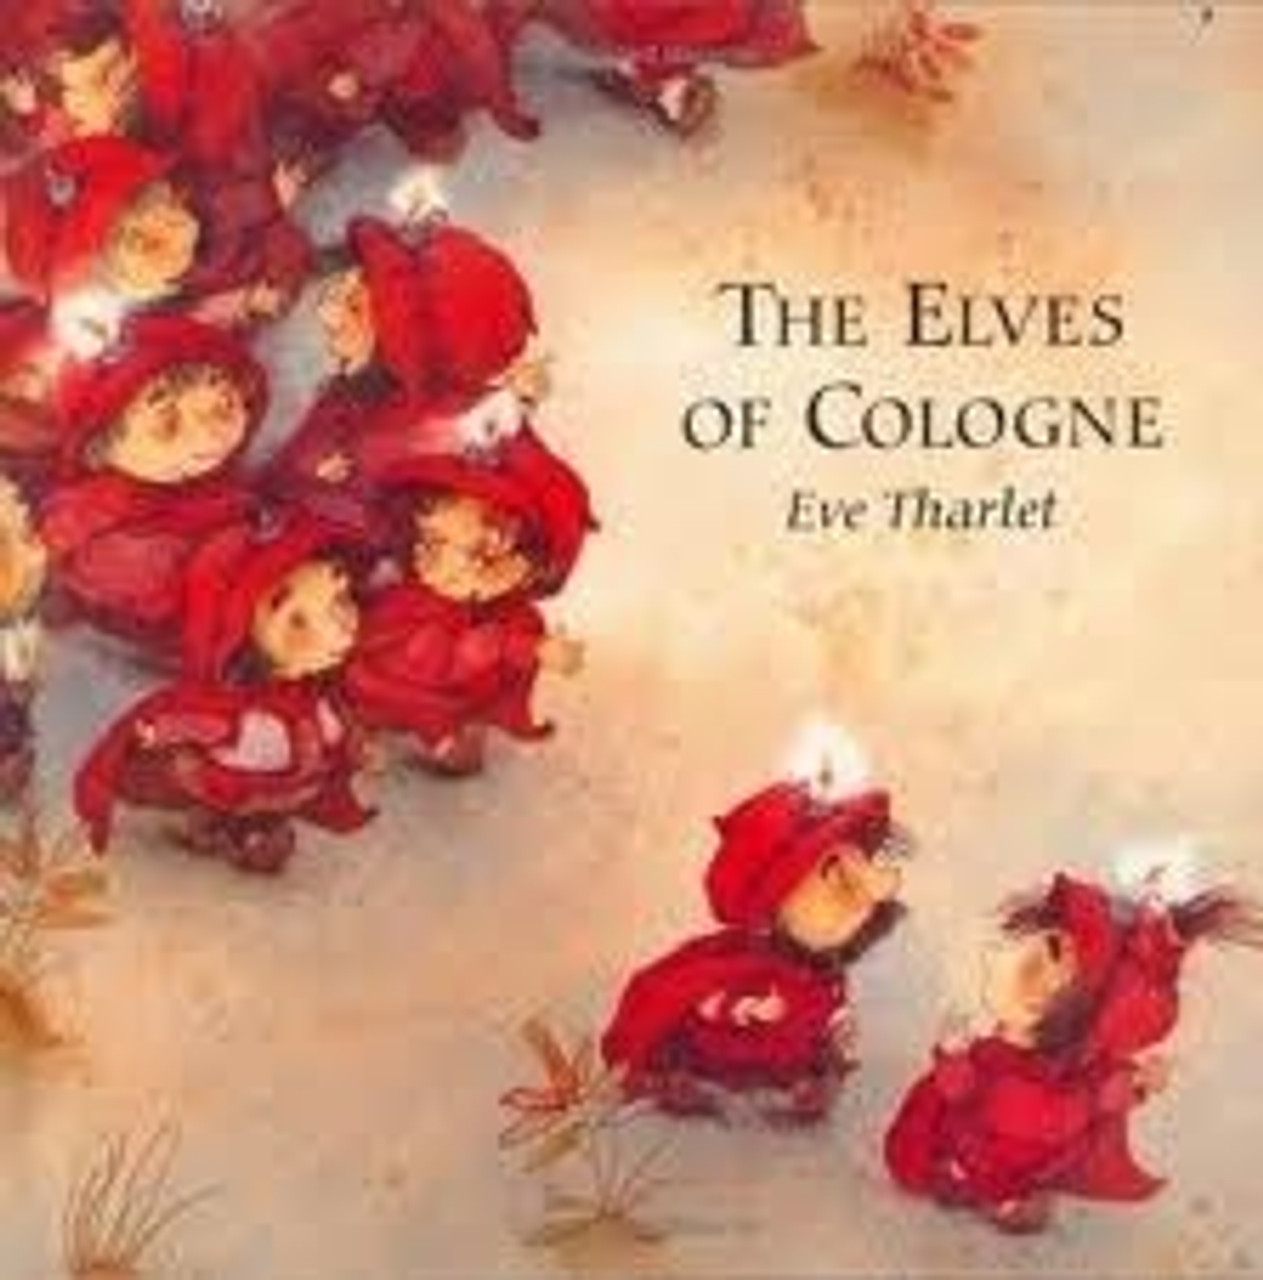 Eve Tharlet / The Elves of Cologne (Hardback)